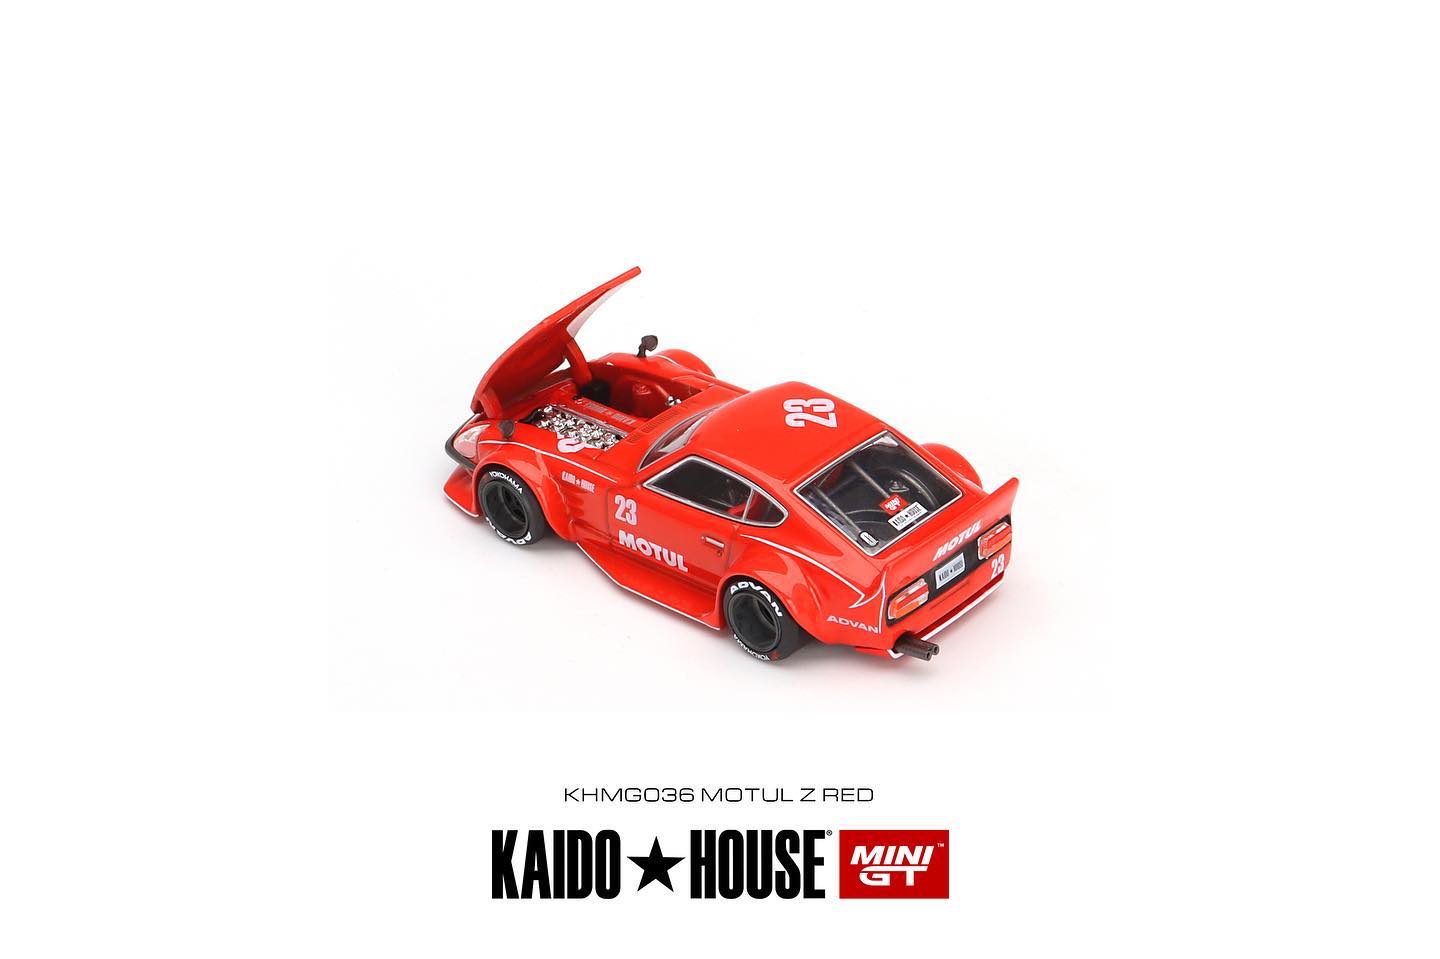 Mini GT x Kaido House Nissan Fairlady Z Motul Z in Red